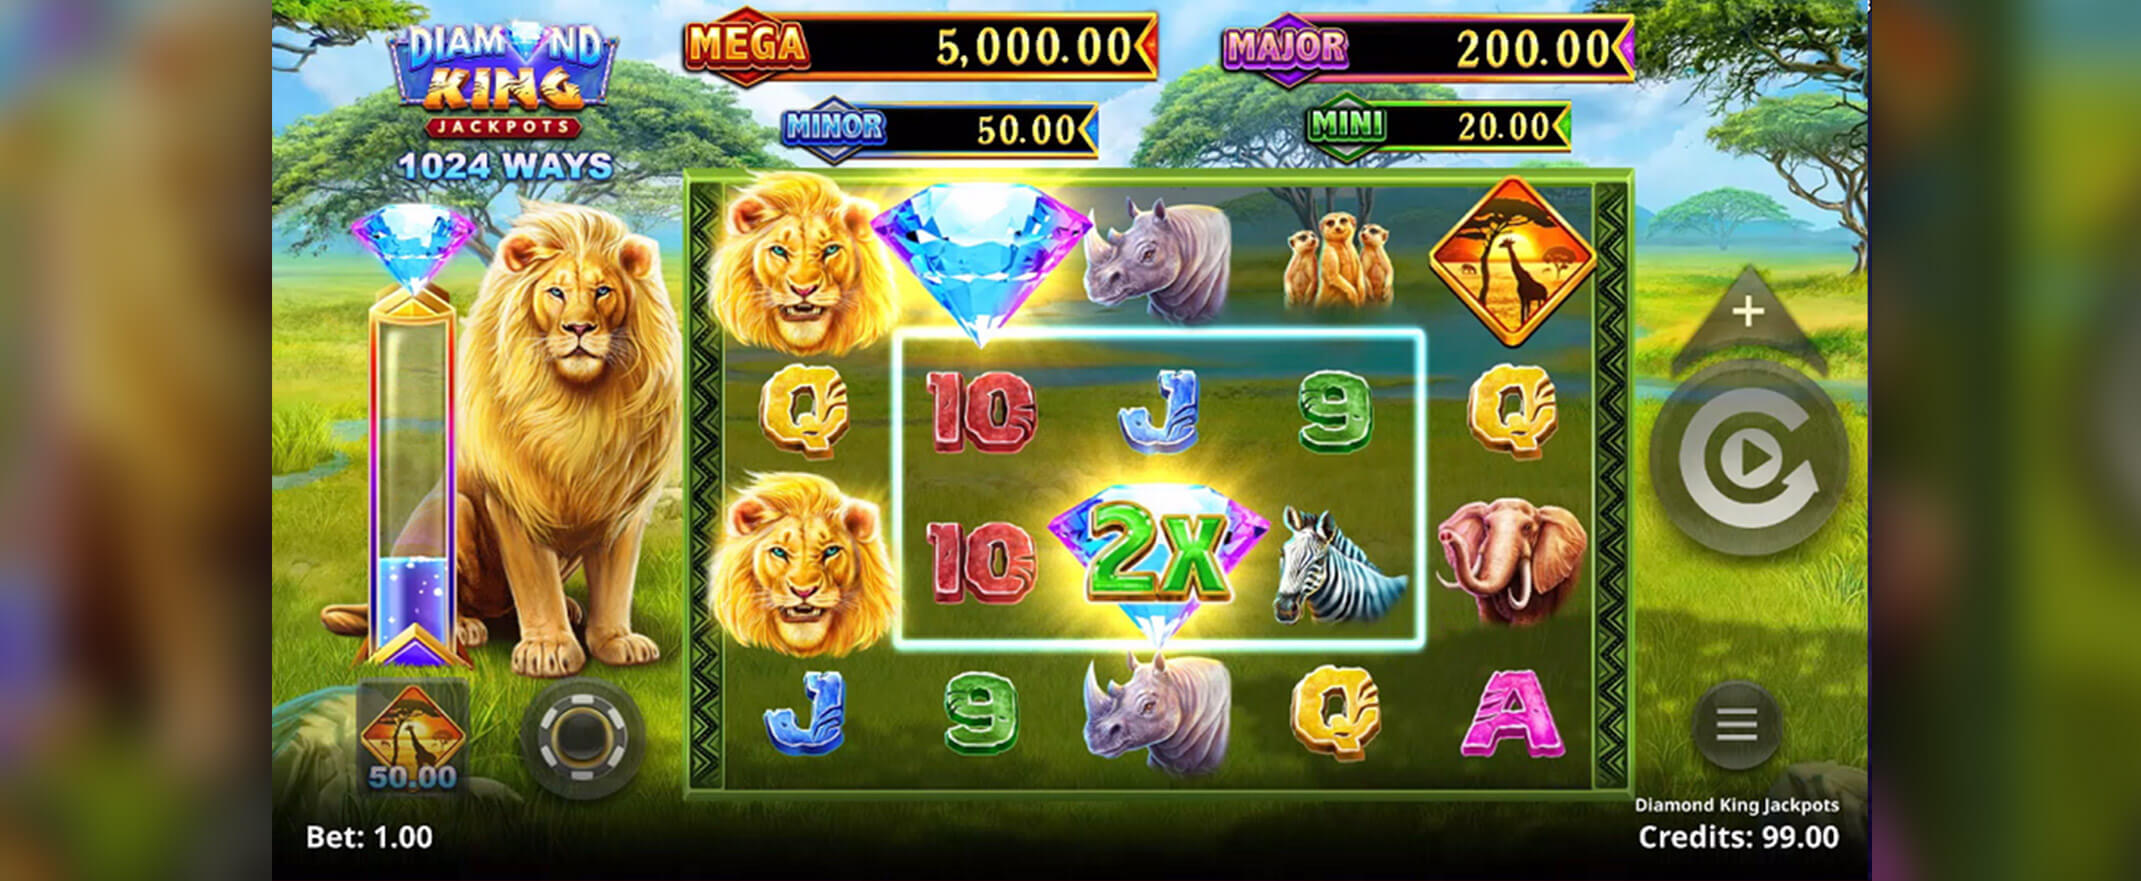 Diamond King Jackpots Spielautomat, Walzen und Symbolen